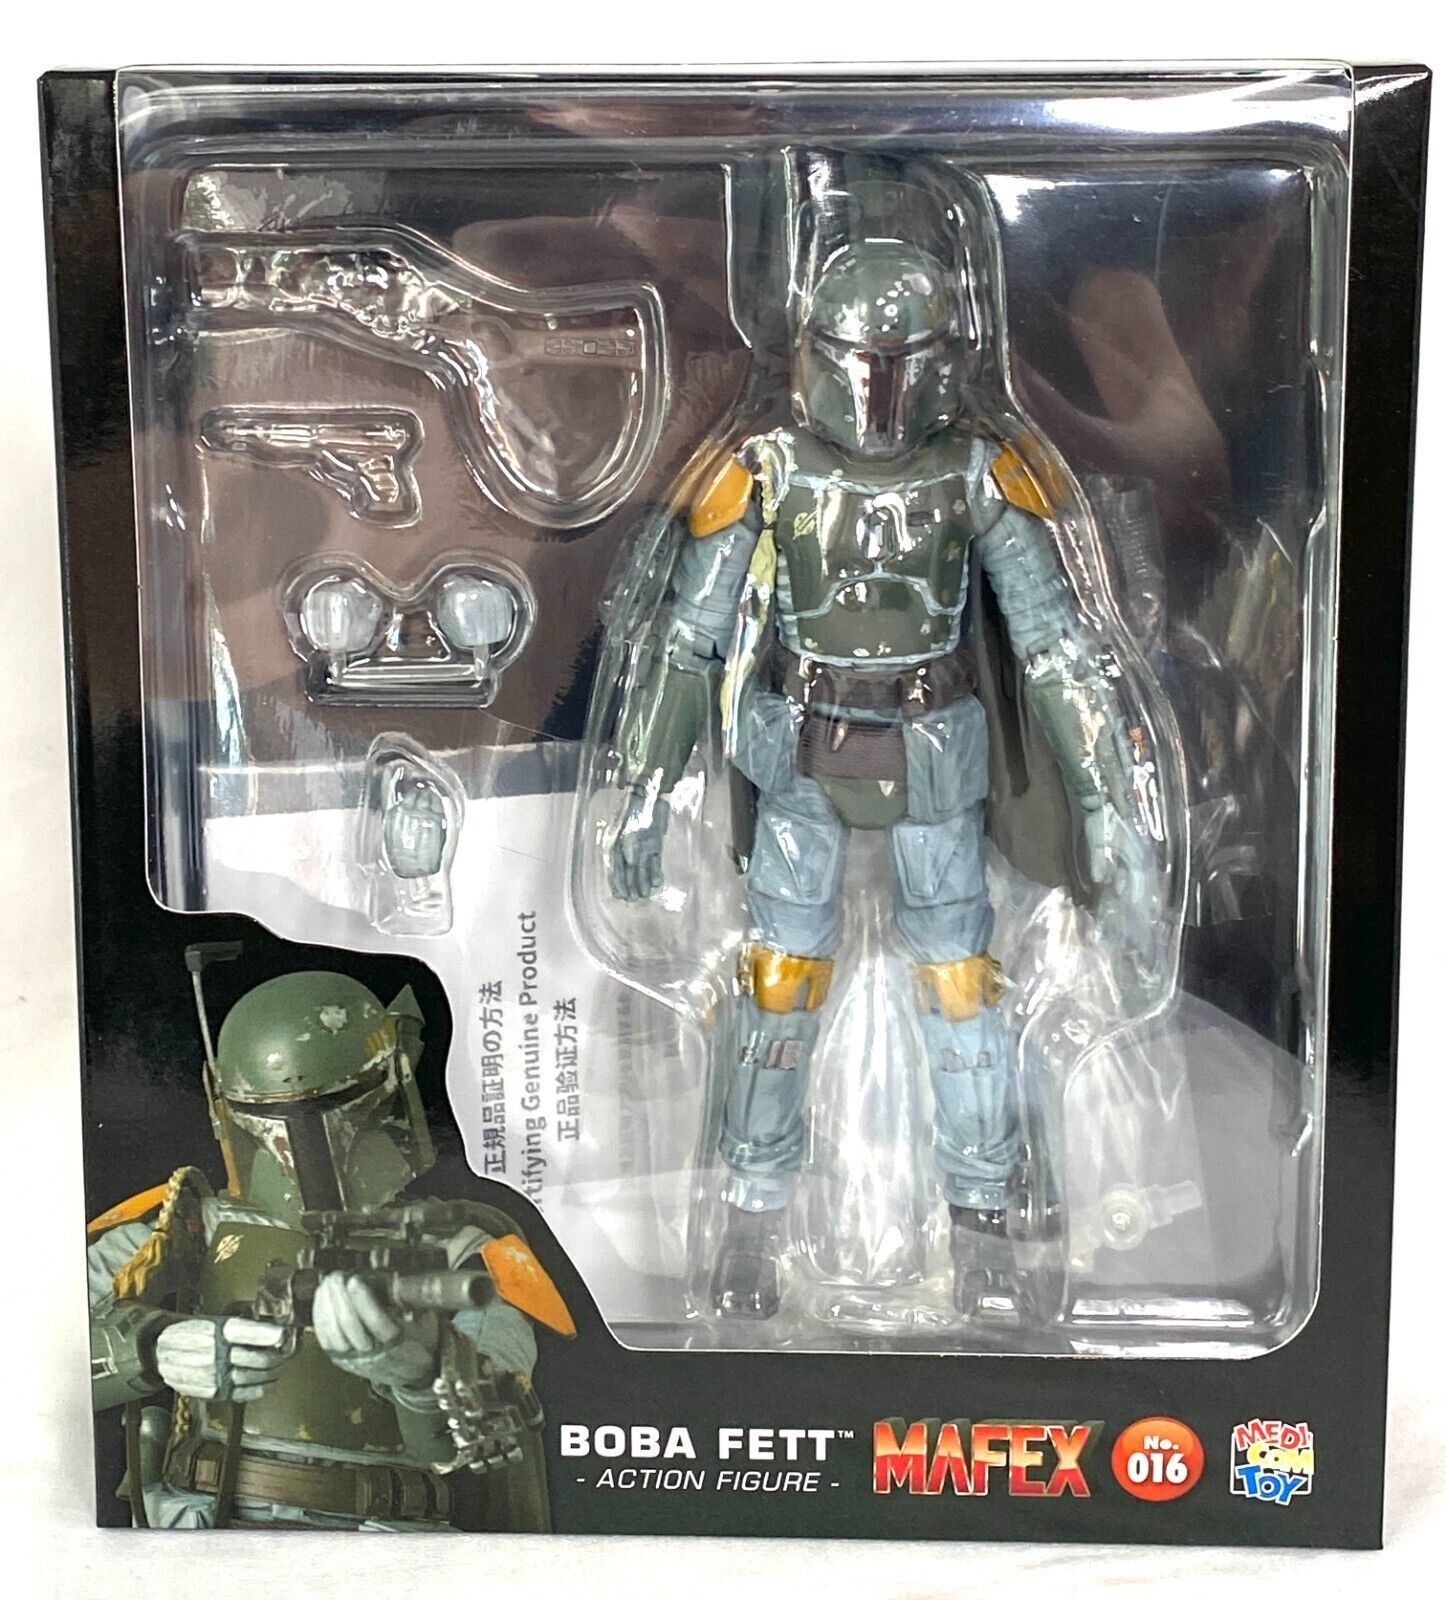 Medicom Toy Mafex 016 Star Wars The Empire Strikes Back Boba Fett Action Figure - $74.95